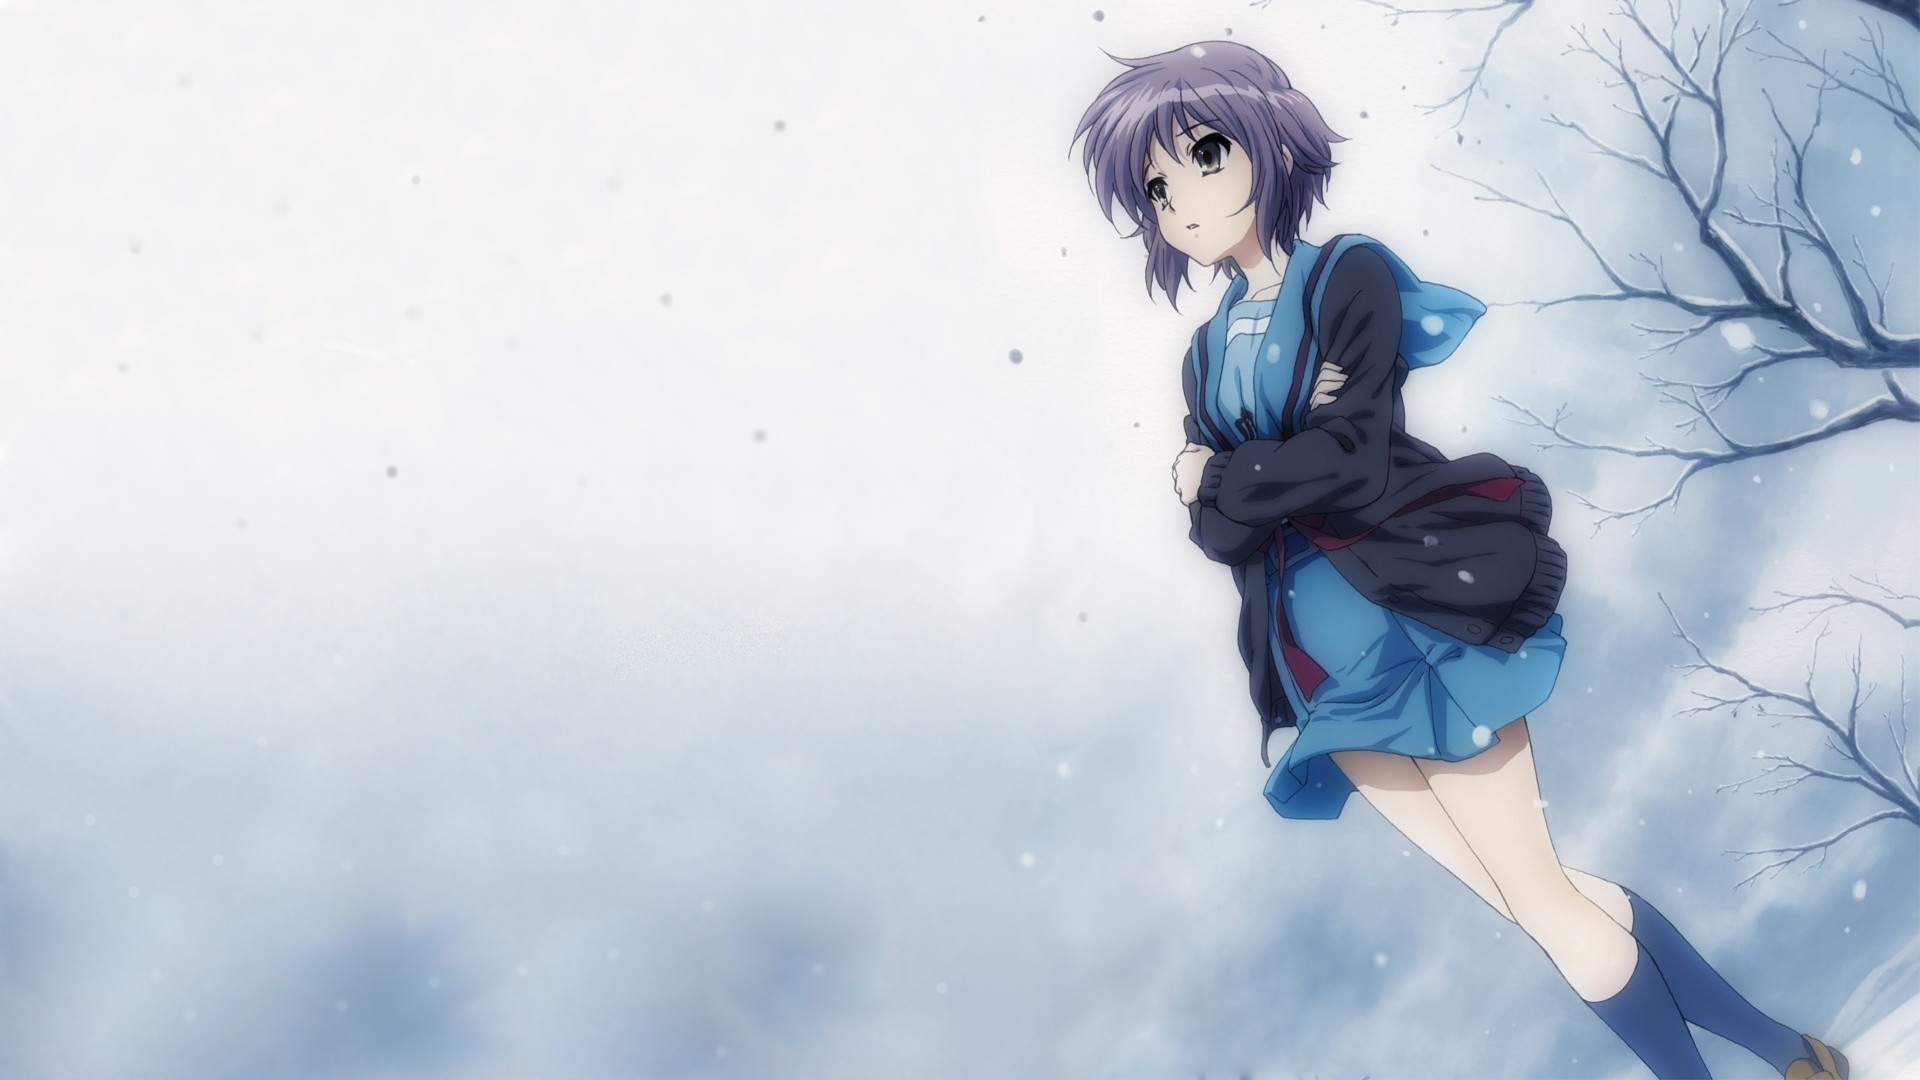 Sad Anime Girls HD Desktop Wallpapers